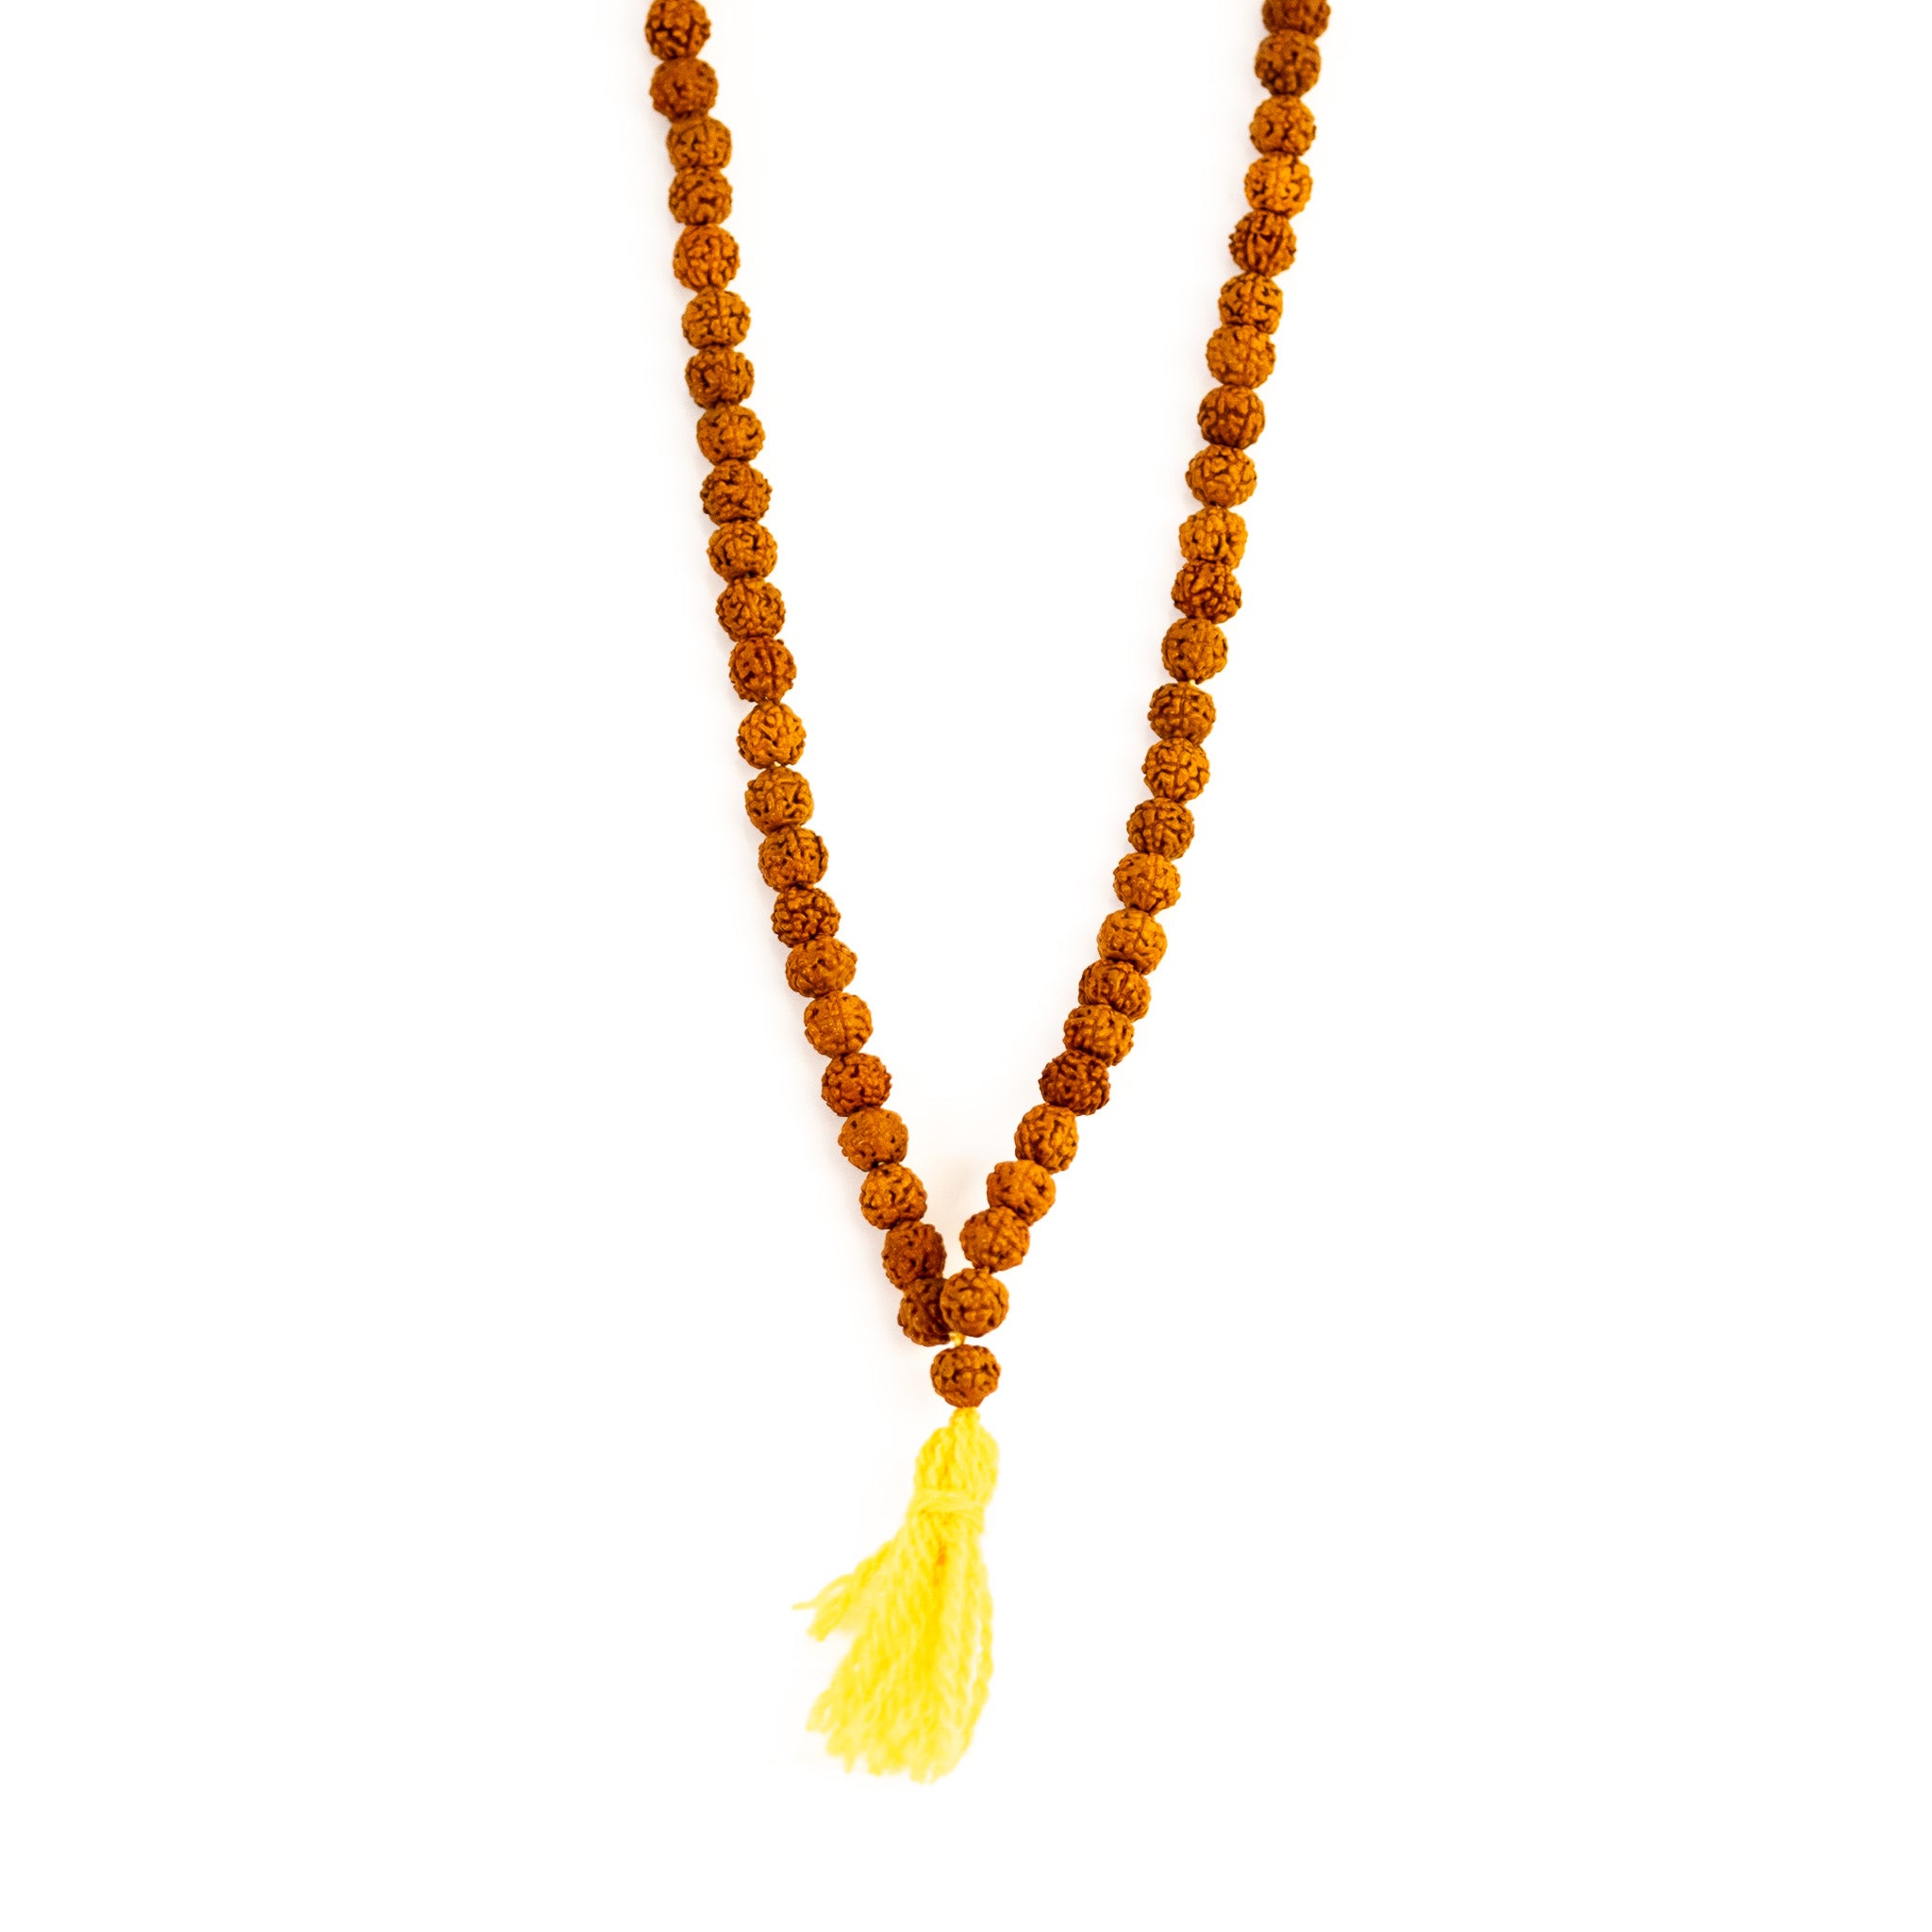 5 Mukhi Mala 6 mm 108 beads for intellect and meditation